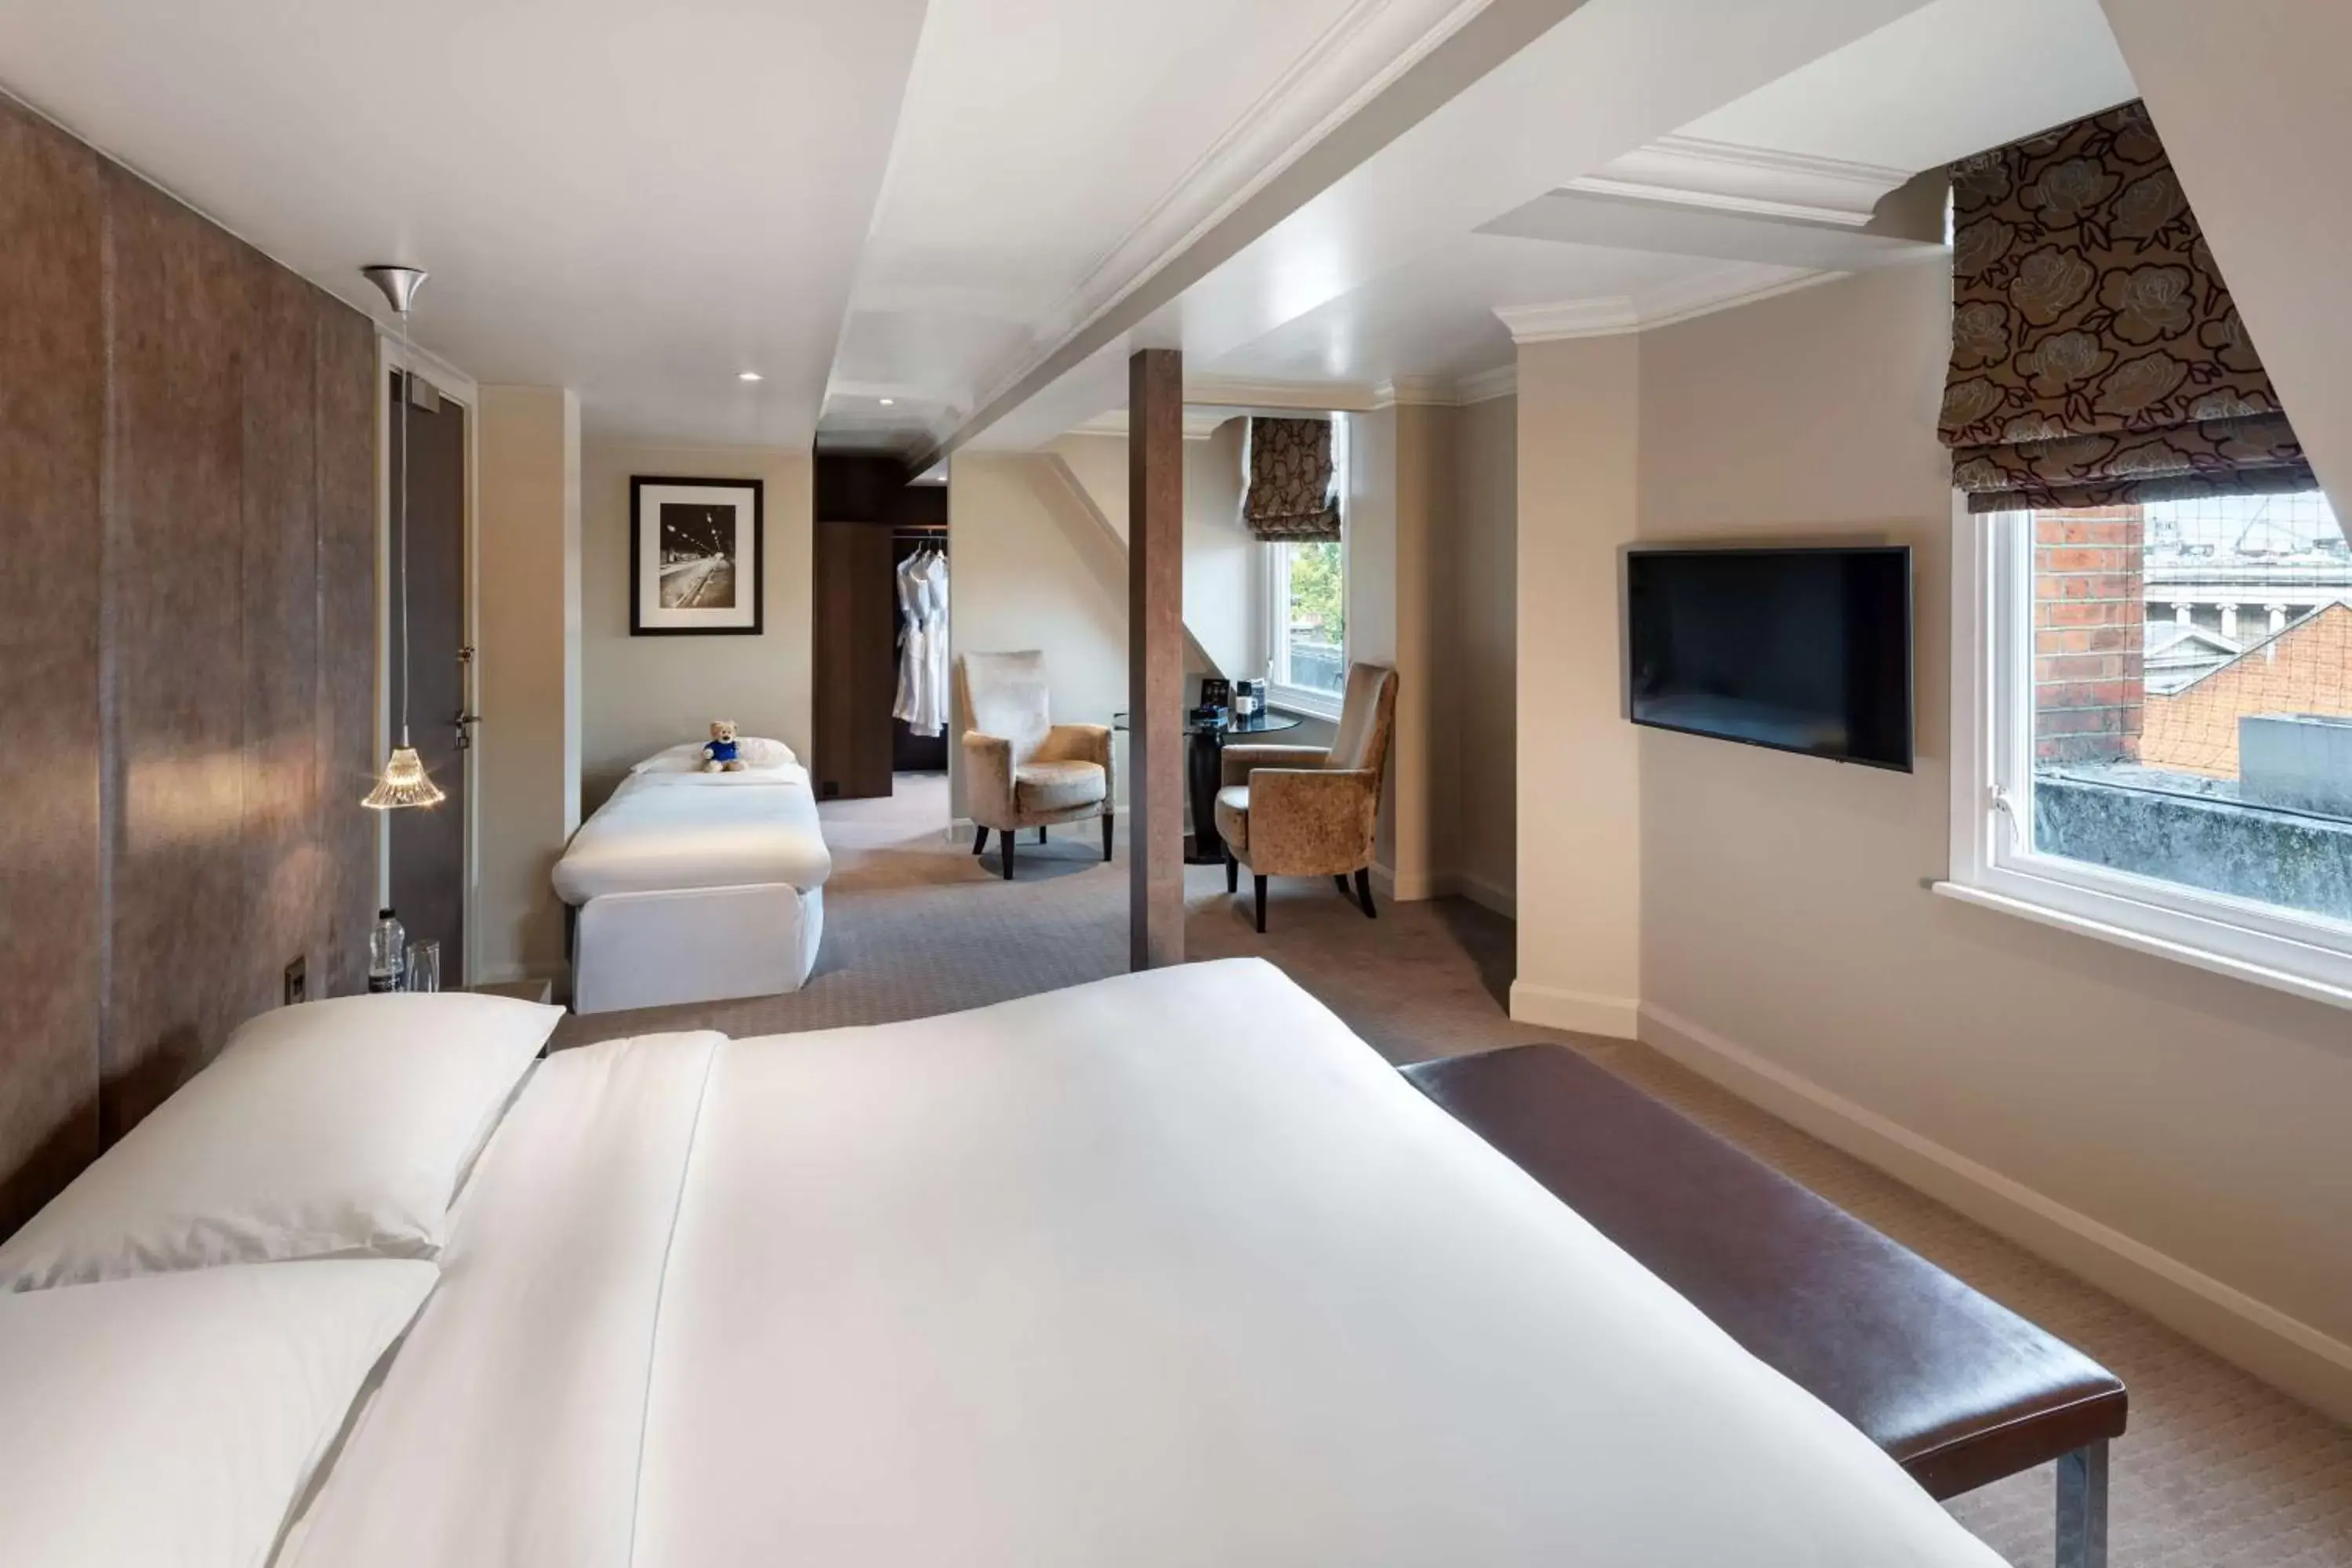 Deluxe Premium Room in Radisson Blu Edwardian Bloomsbury Street Hotel, London